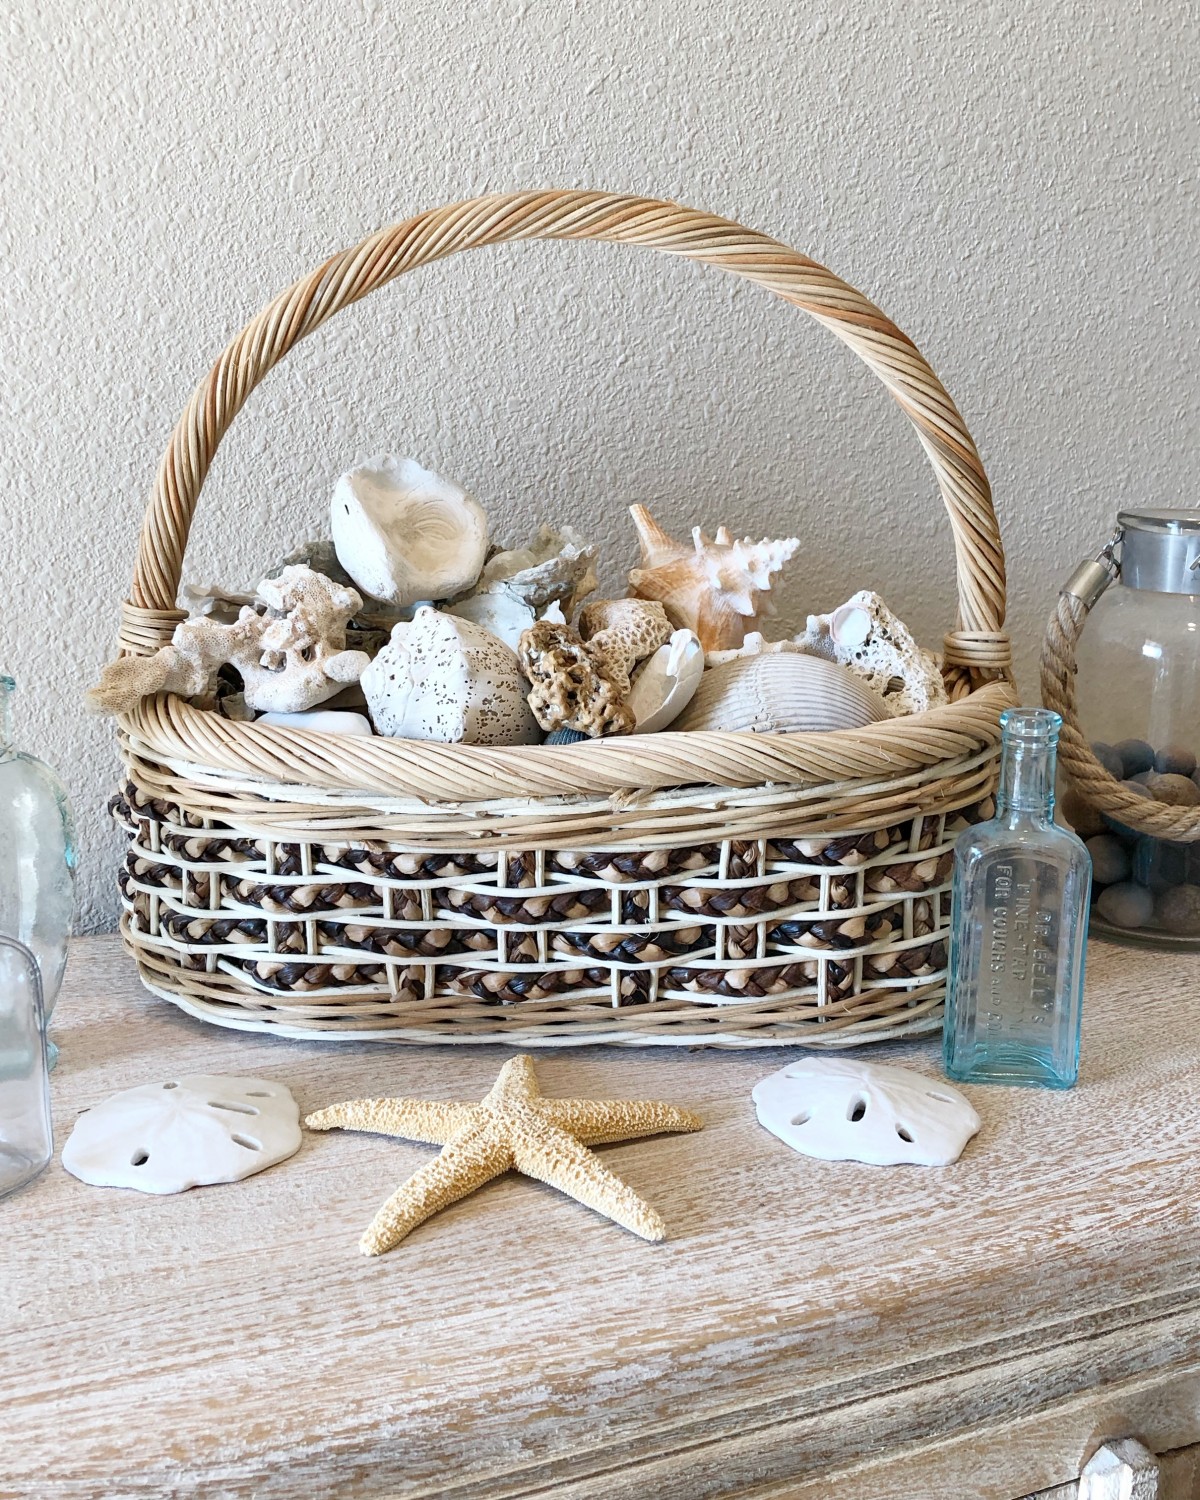 Basket and seashells